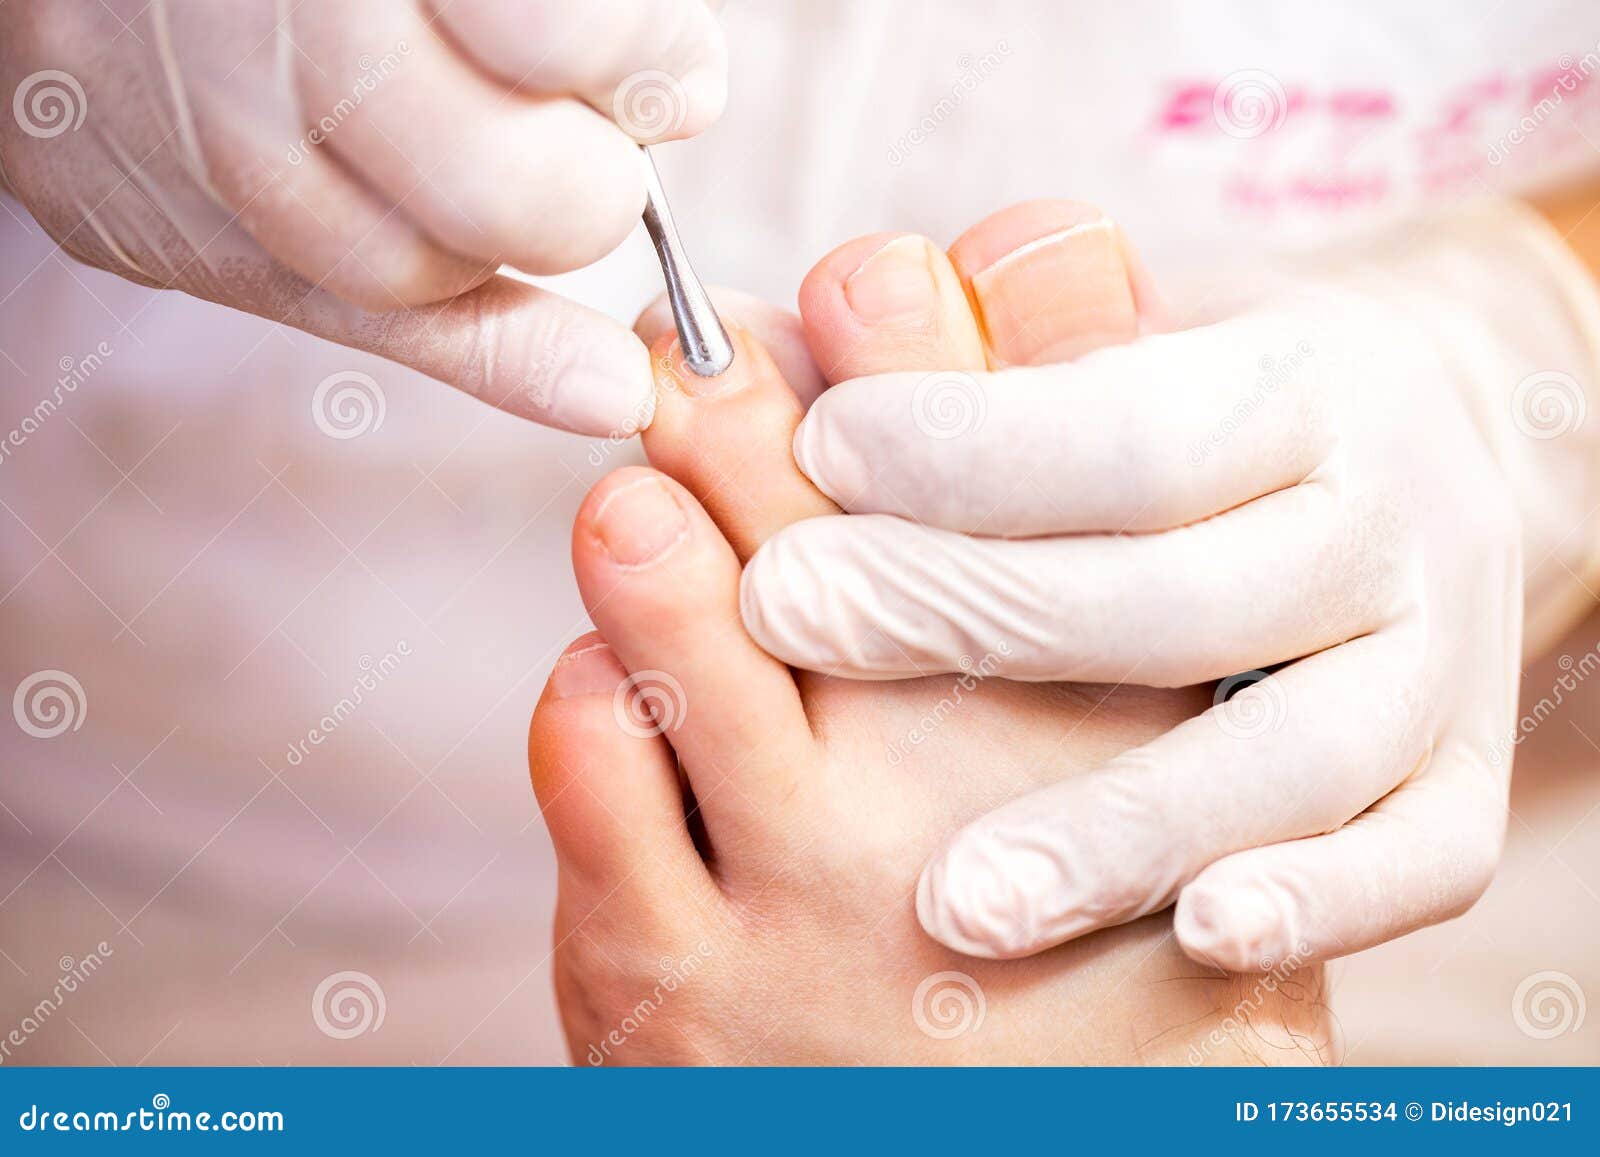 cuticle treatment for pretty and clean toenails, menÃ¢â¬â¢s pedicure toenail concept